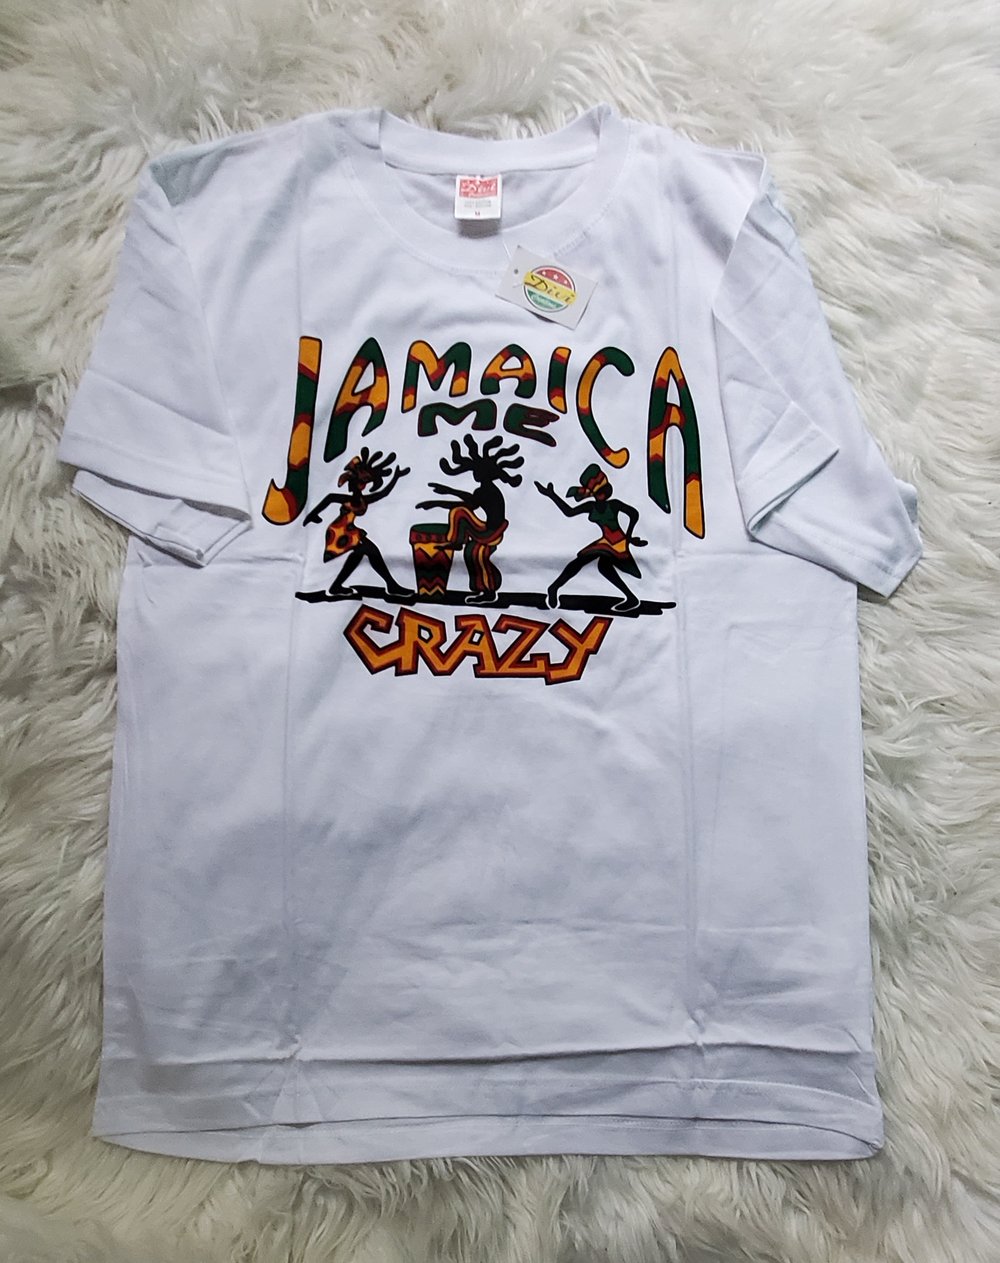 Jamaica me crazy white tee